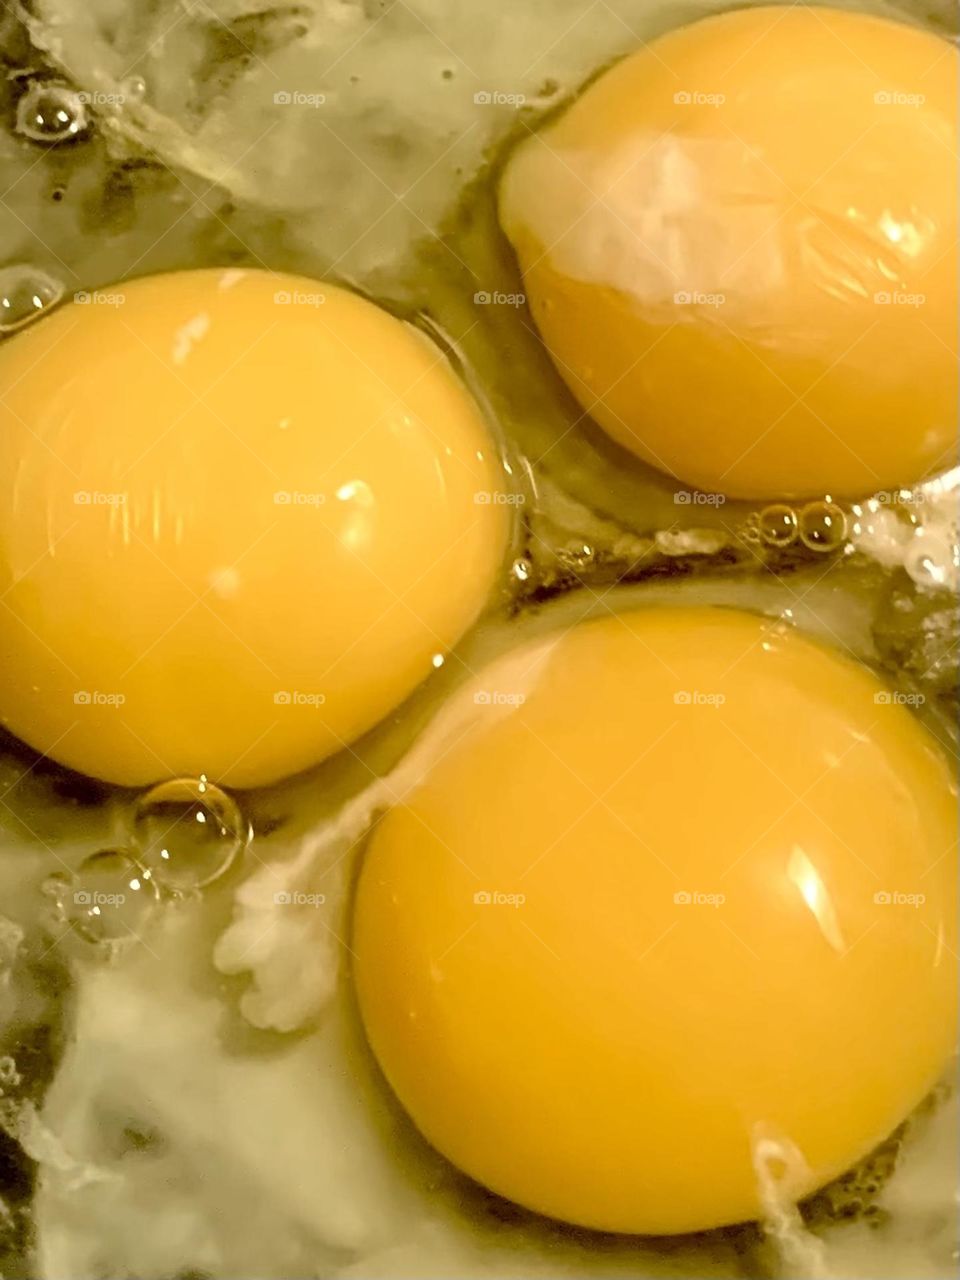 Egg yolks 